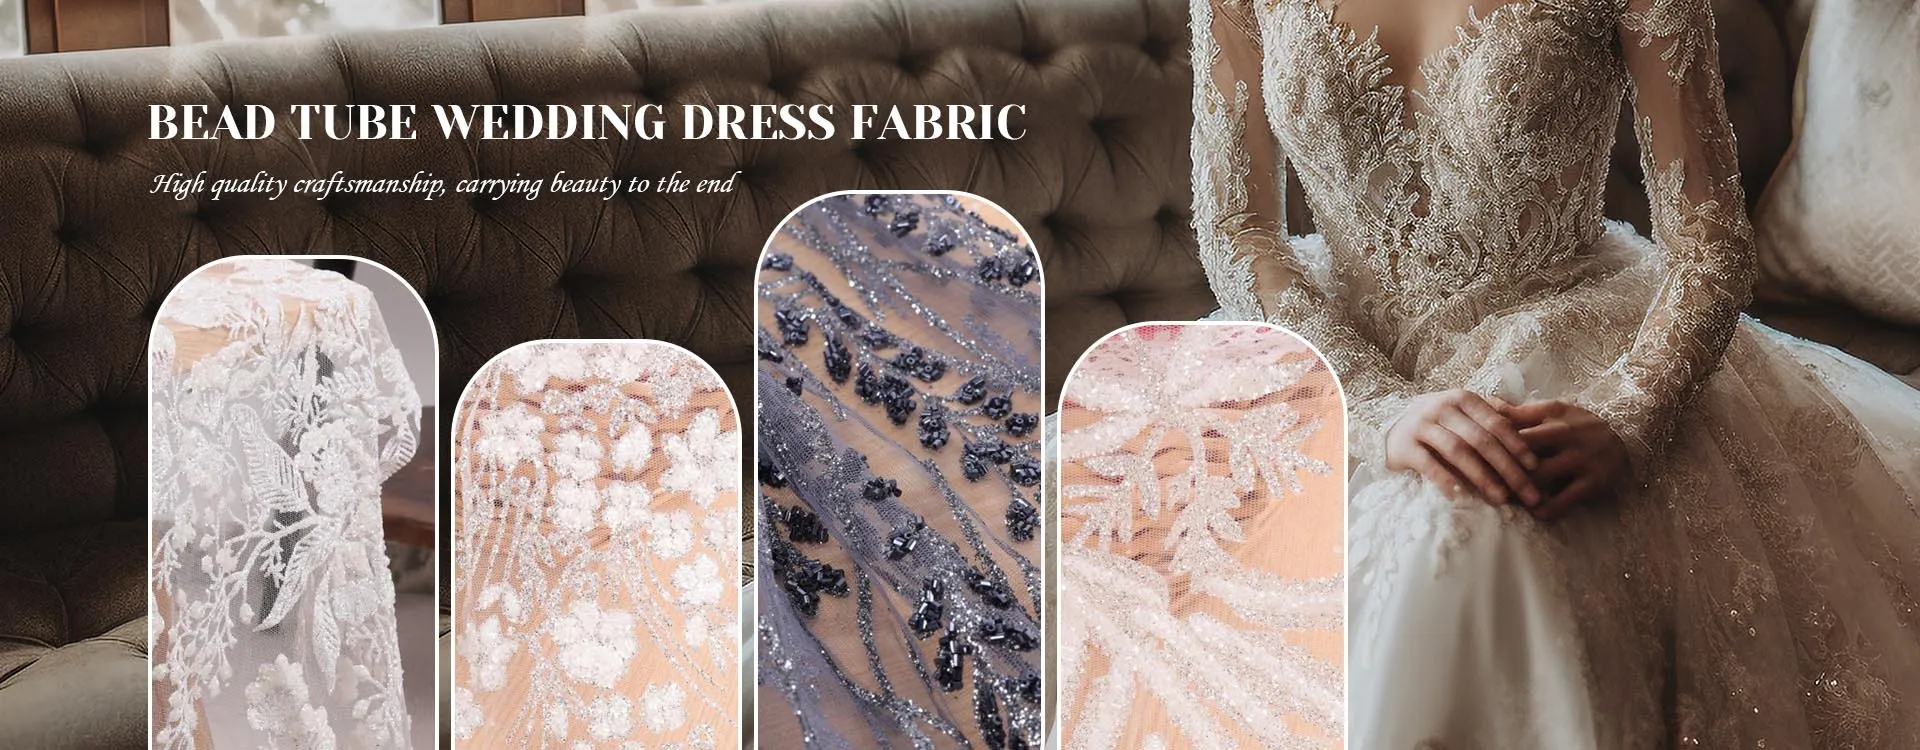 China Bead Tube Wedding Dress Fabric Suppliers